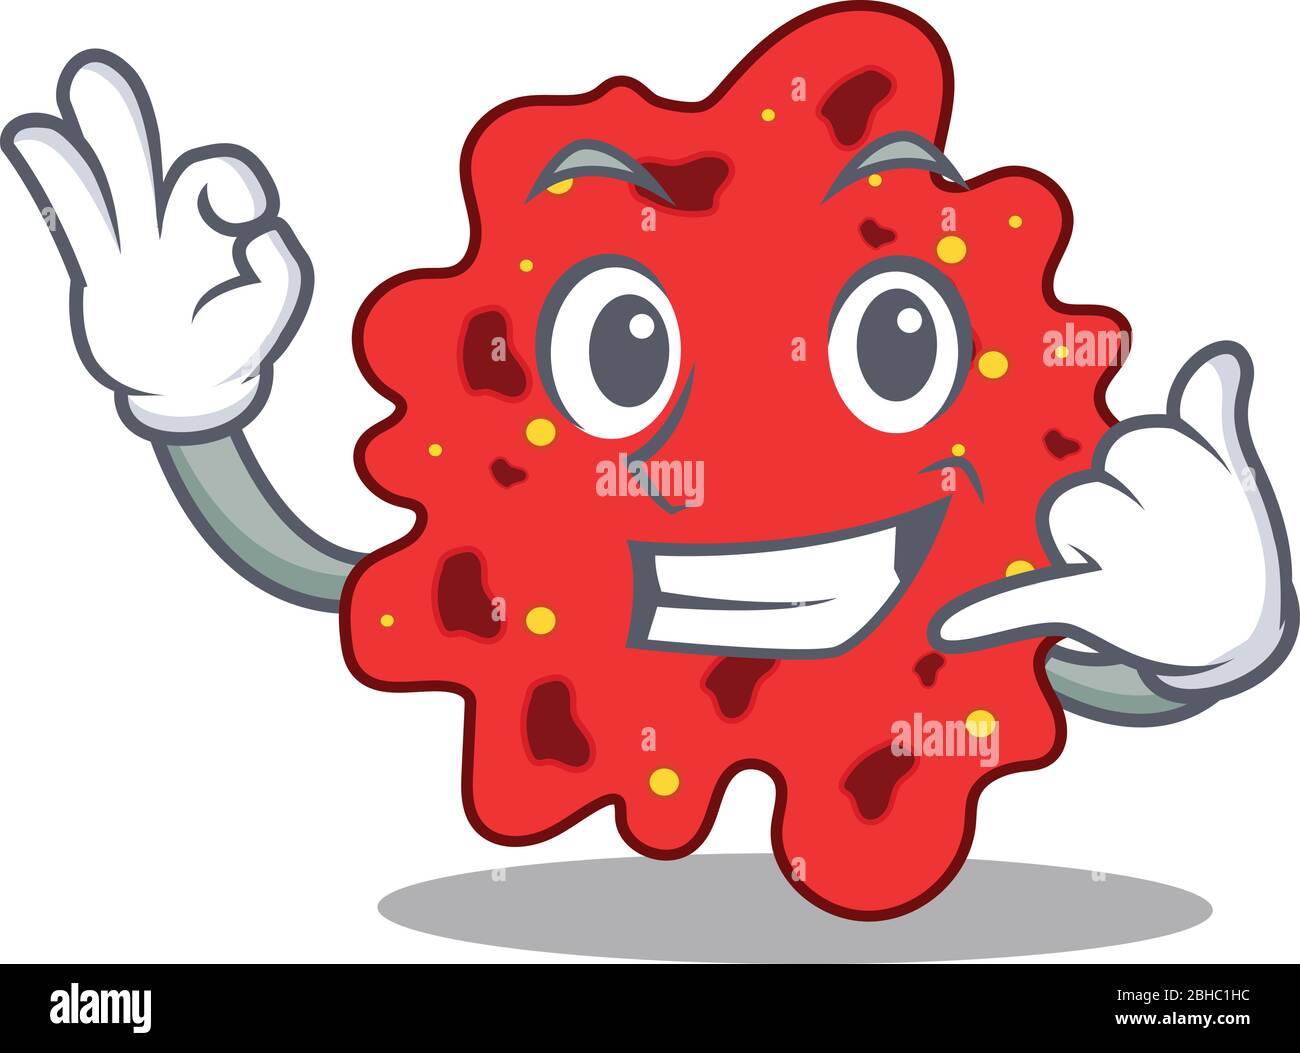 Cartoon design of streptococcus pneumoniae with call me funny gesture Stock Vector